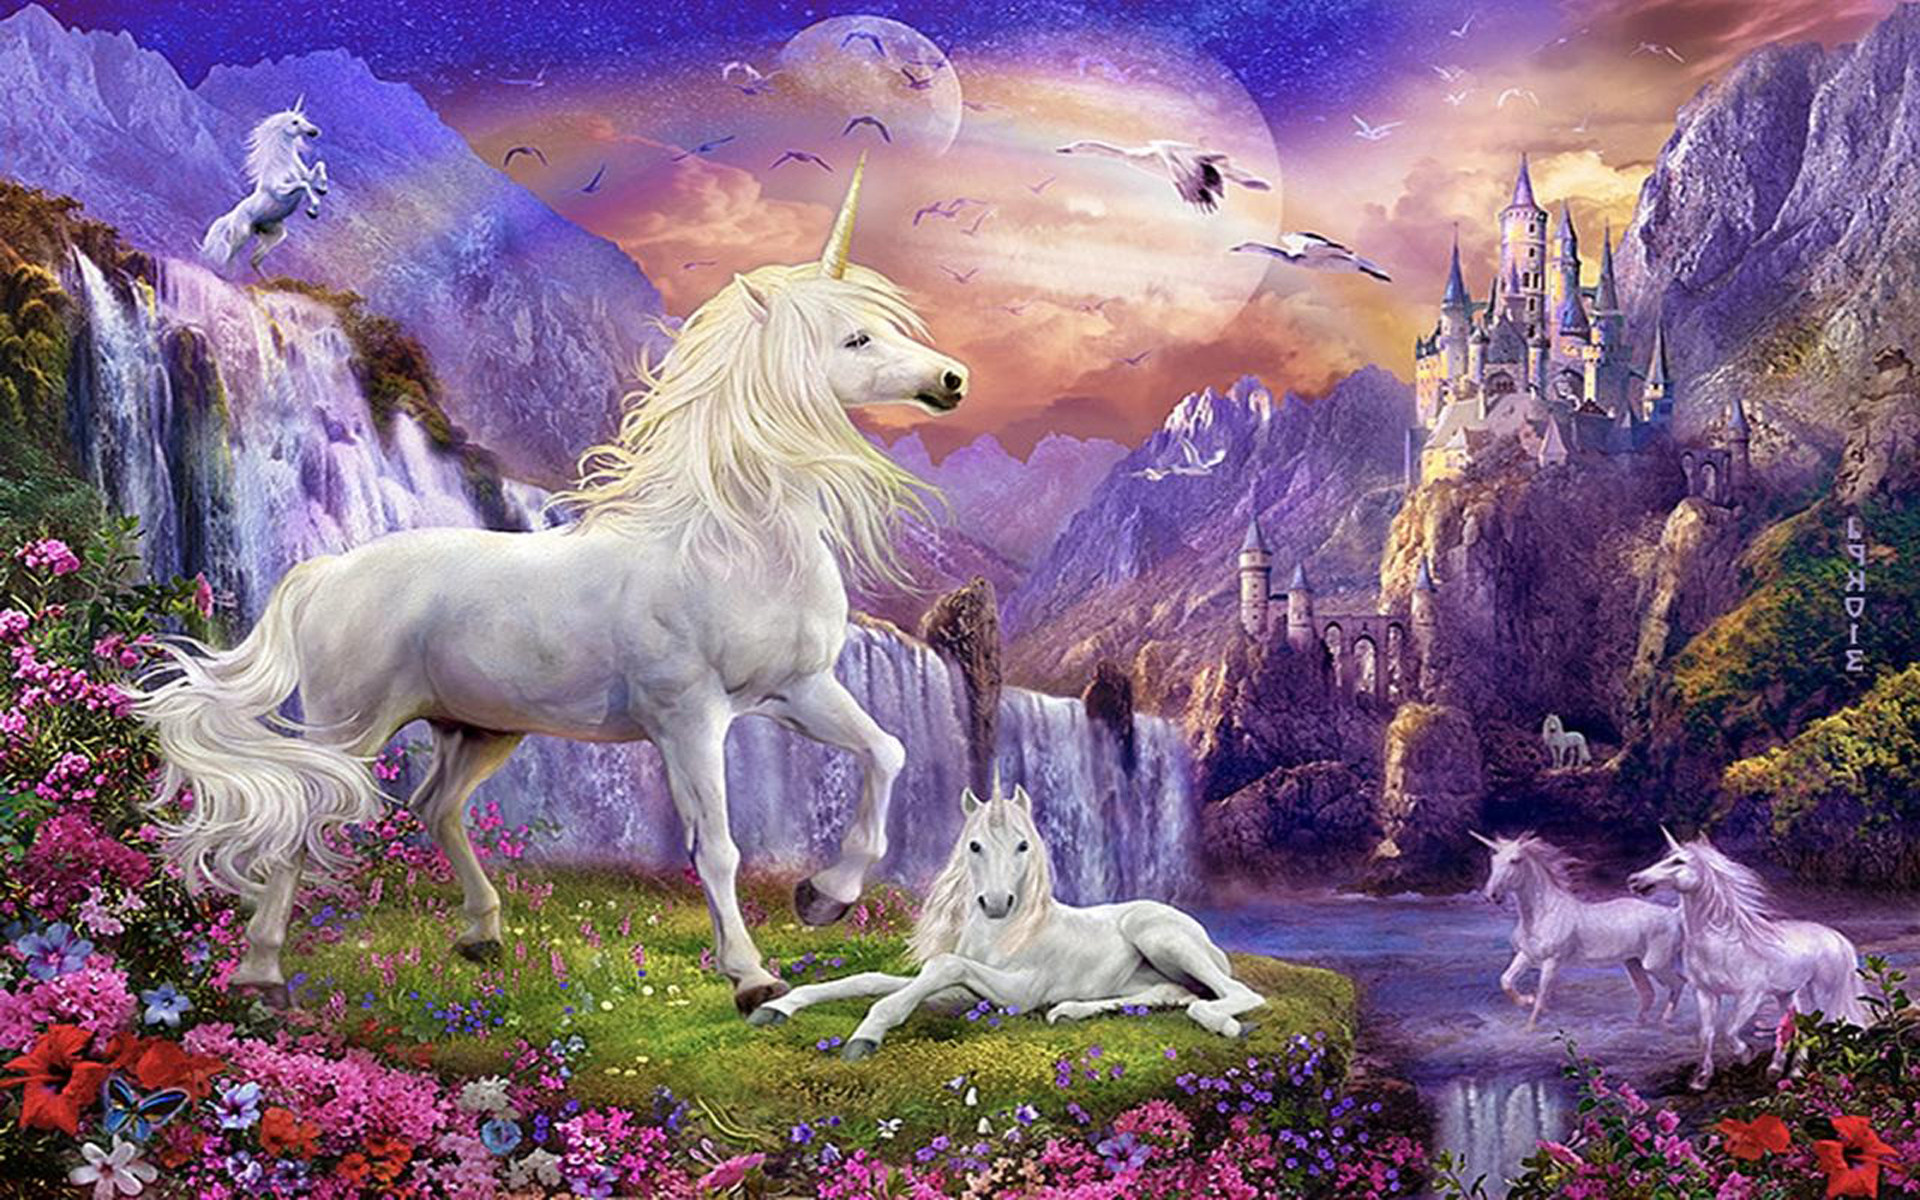 Free unicorn wallpaper, Charming downloads, Creative artwork, Delightful images, 1920x1200 HD Desktop